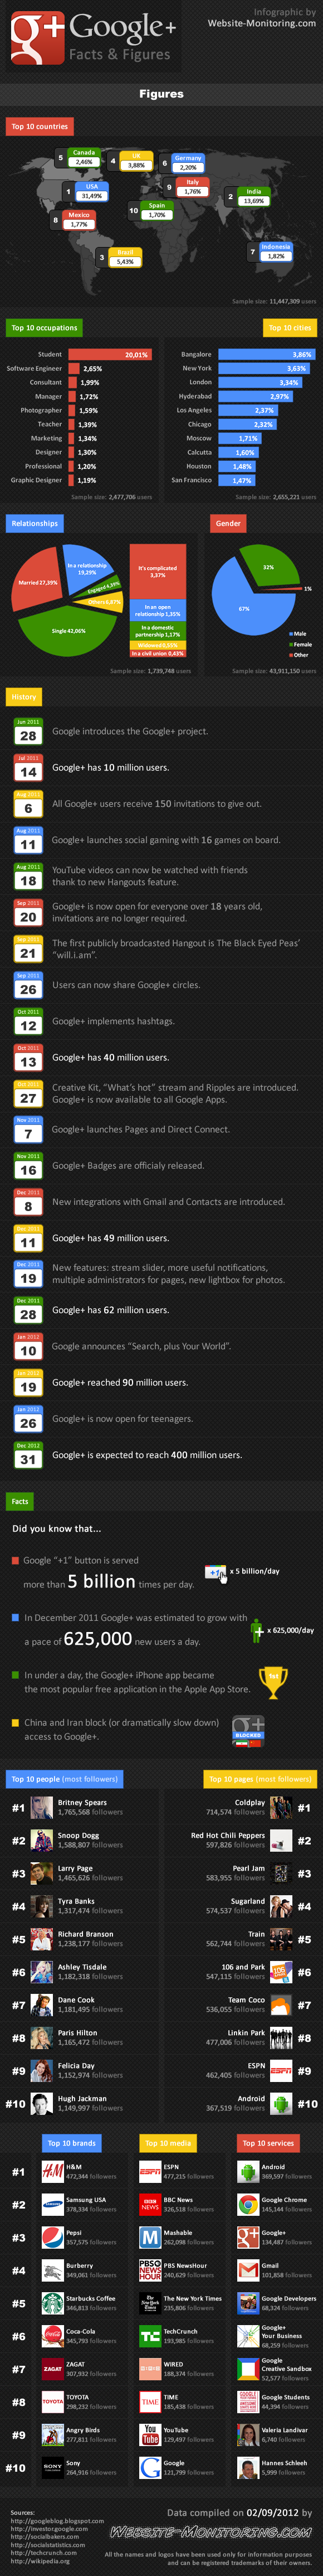 Google Plus Infographic